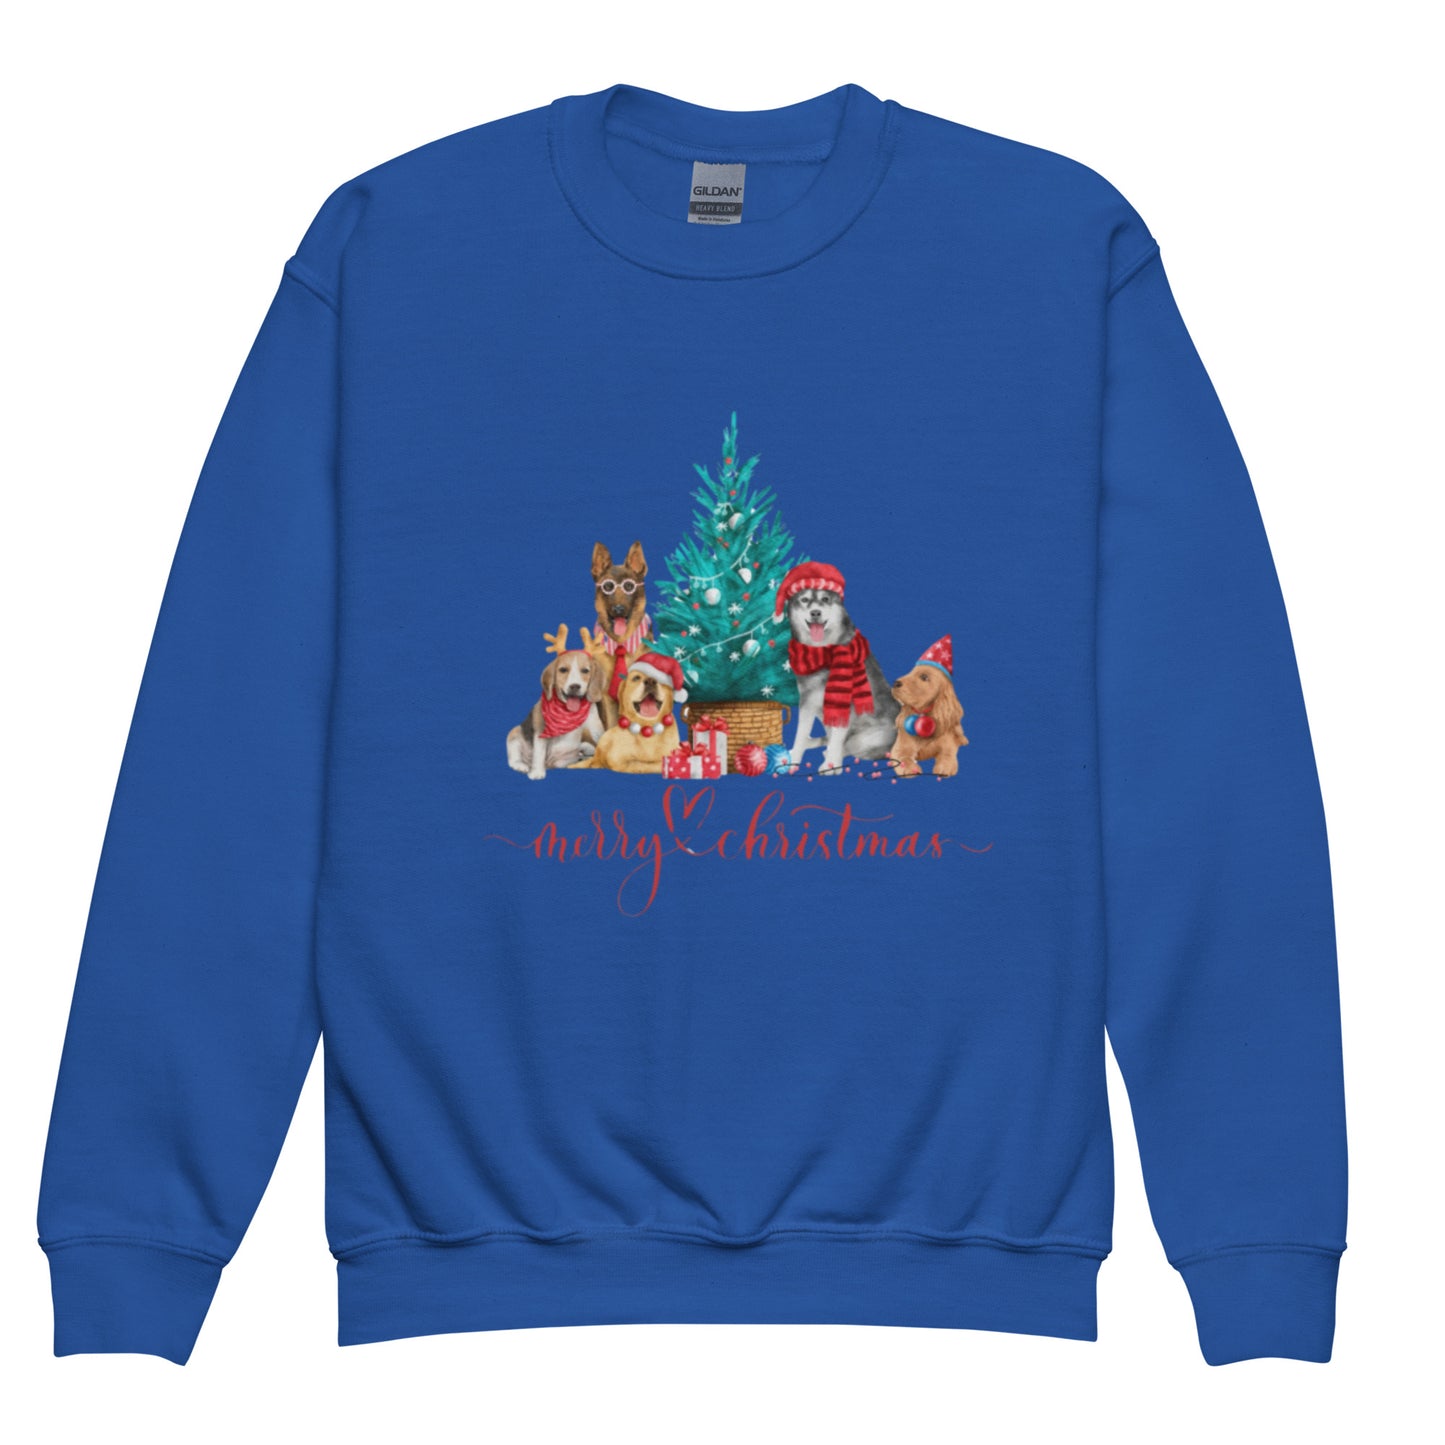 Dog Christmas Youth crewneck sweatshirt